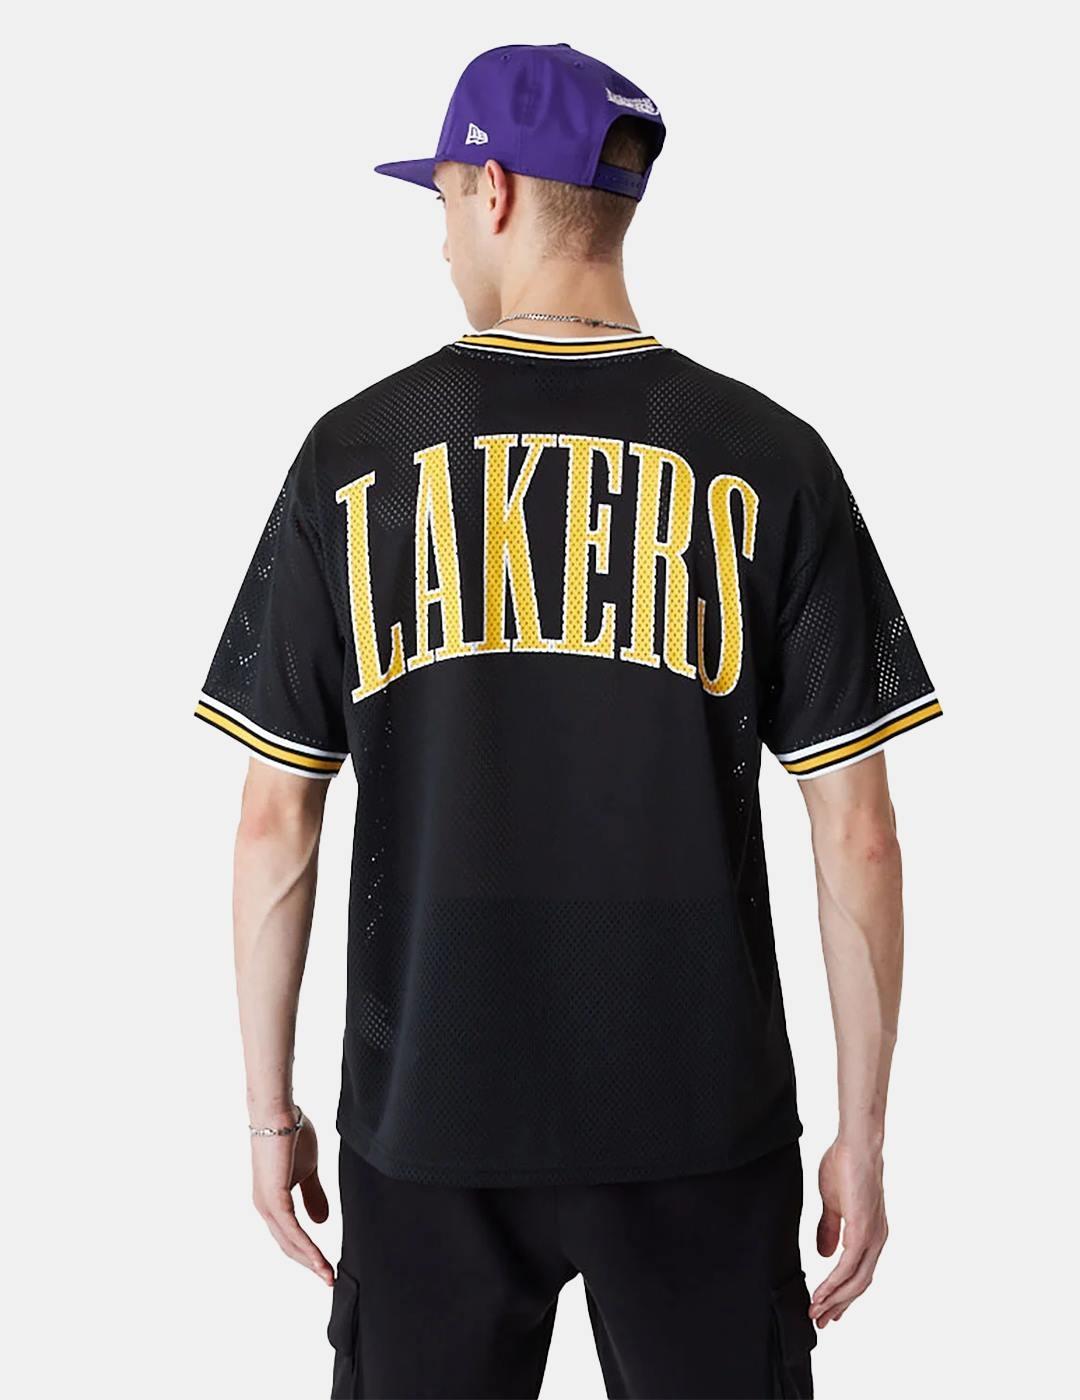 Camiseta New Era NBA Lakers Mesh Negro